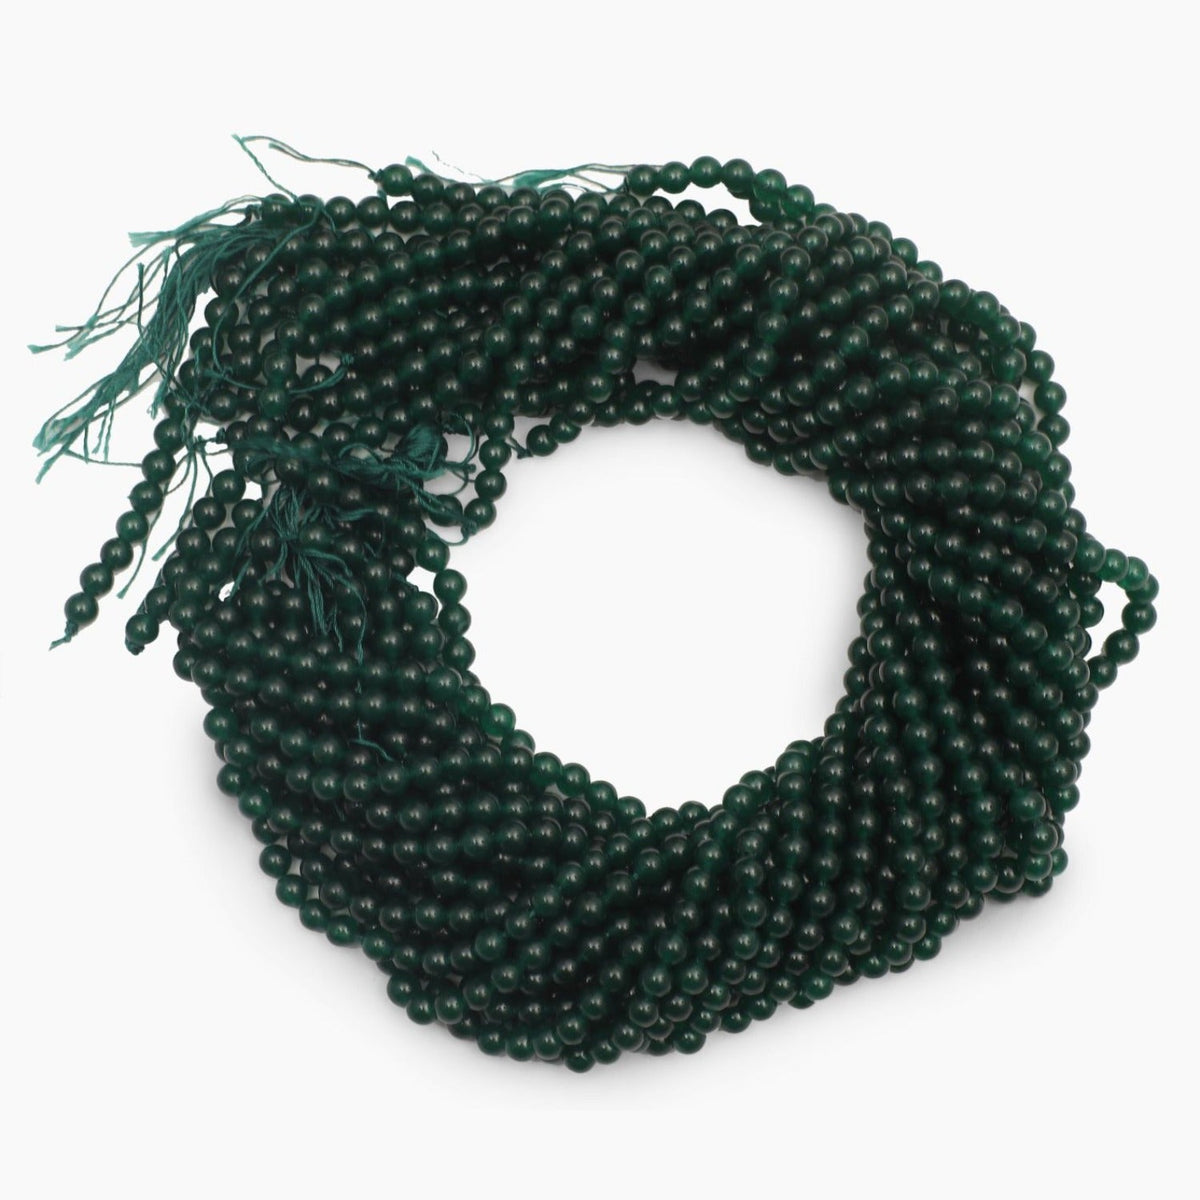 Green Jade Dyed Quartz 5mm Beads- Sold Per Strand